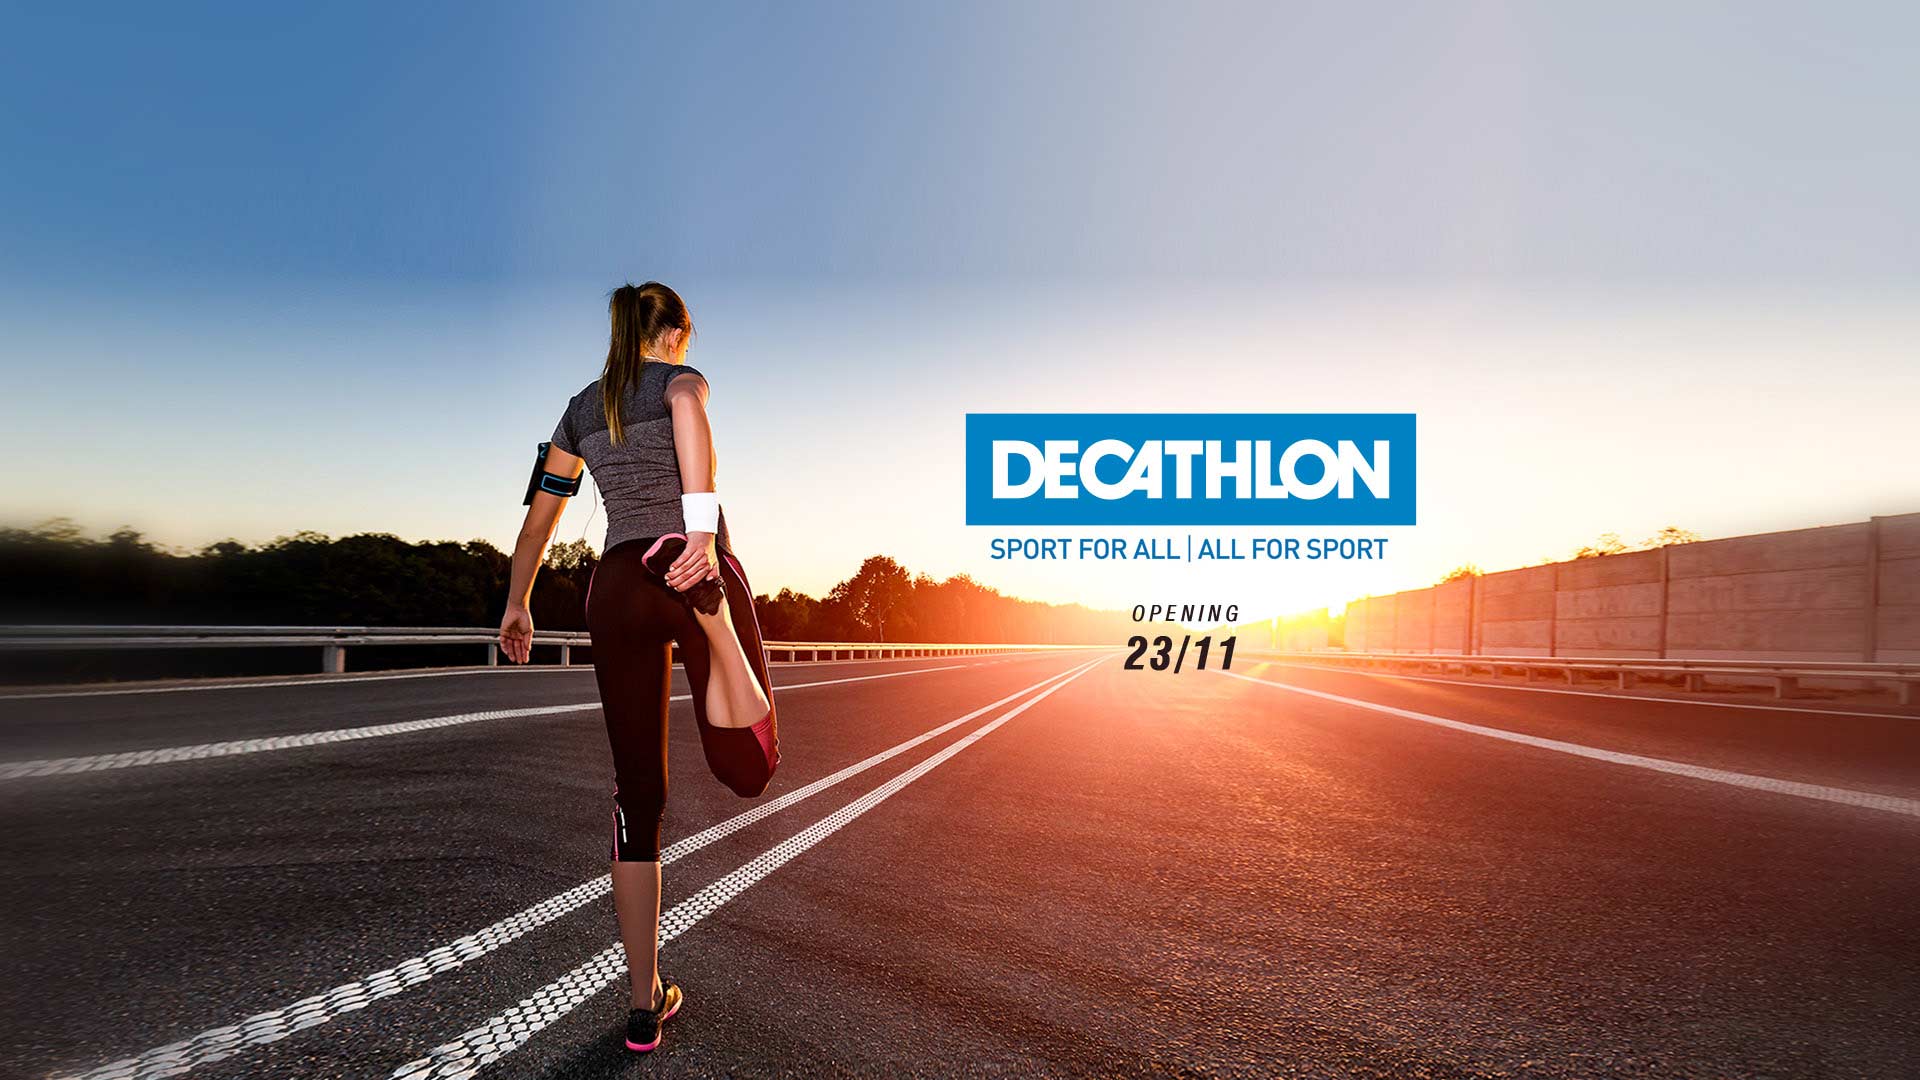 the decathlon sport